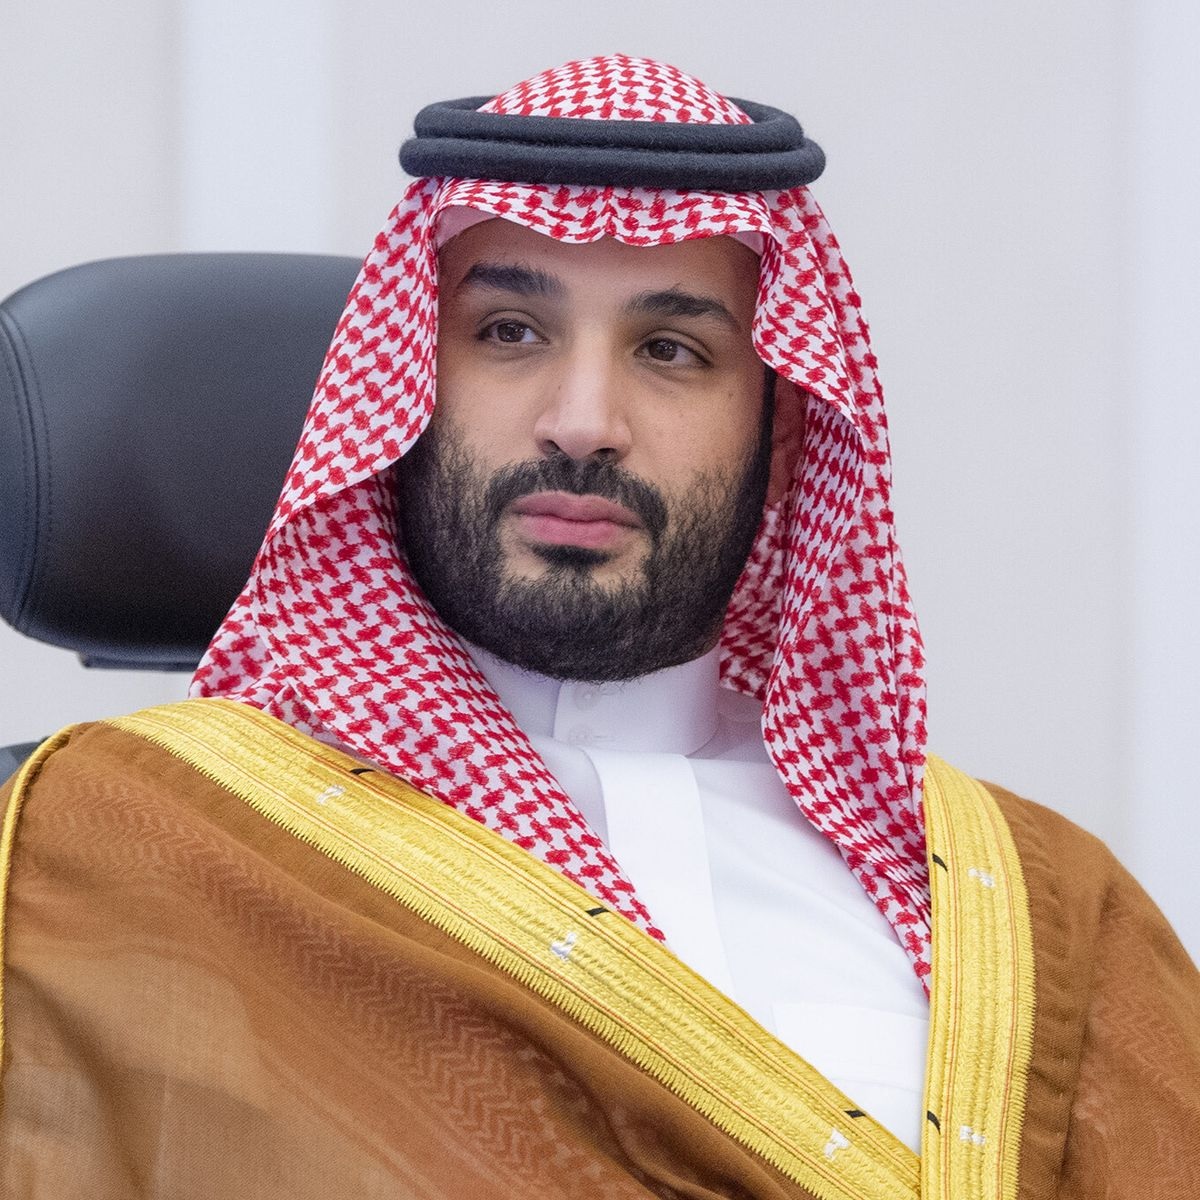 Liquor Store in Saudi Arabia: سعودی عرب میں پہلی شراب کی دوکان، شہزادہ محمد بن سلمان کا کیا ہے مقصد؟